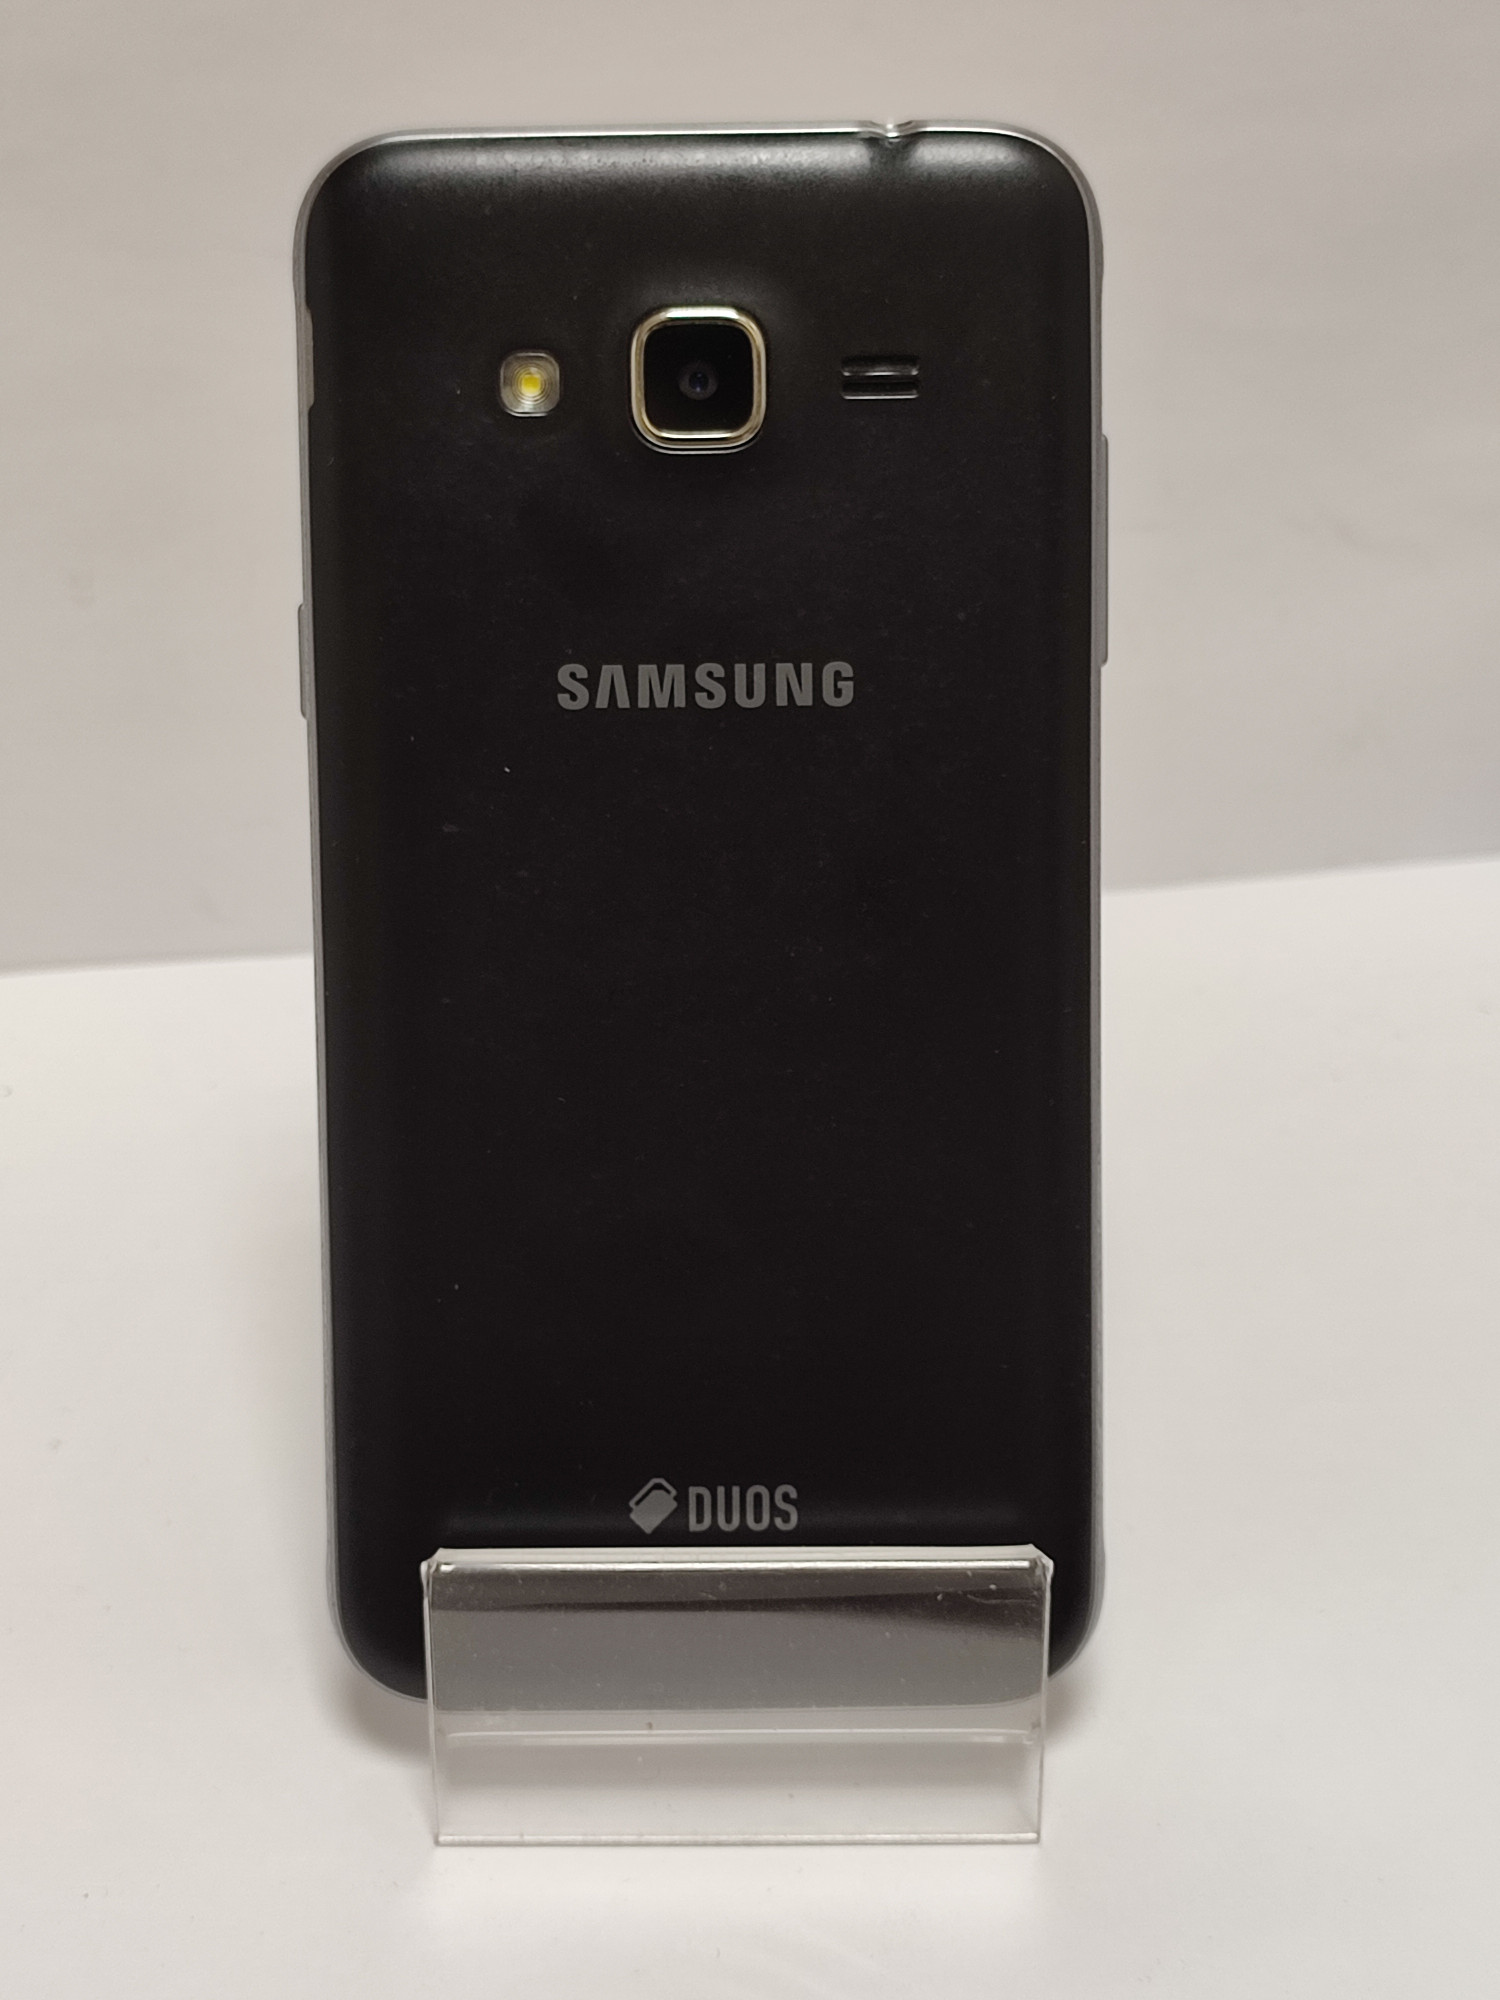 Samsung Galaxy J3 2016 Black (SM-J320HZKD) 1/8Gb 1